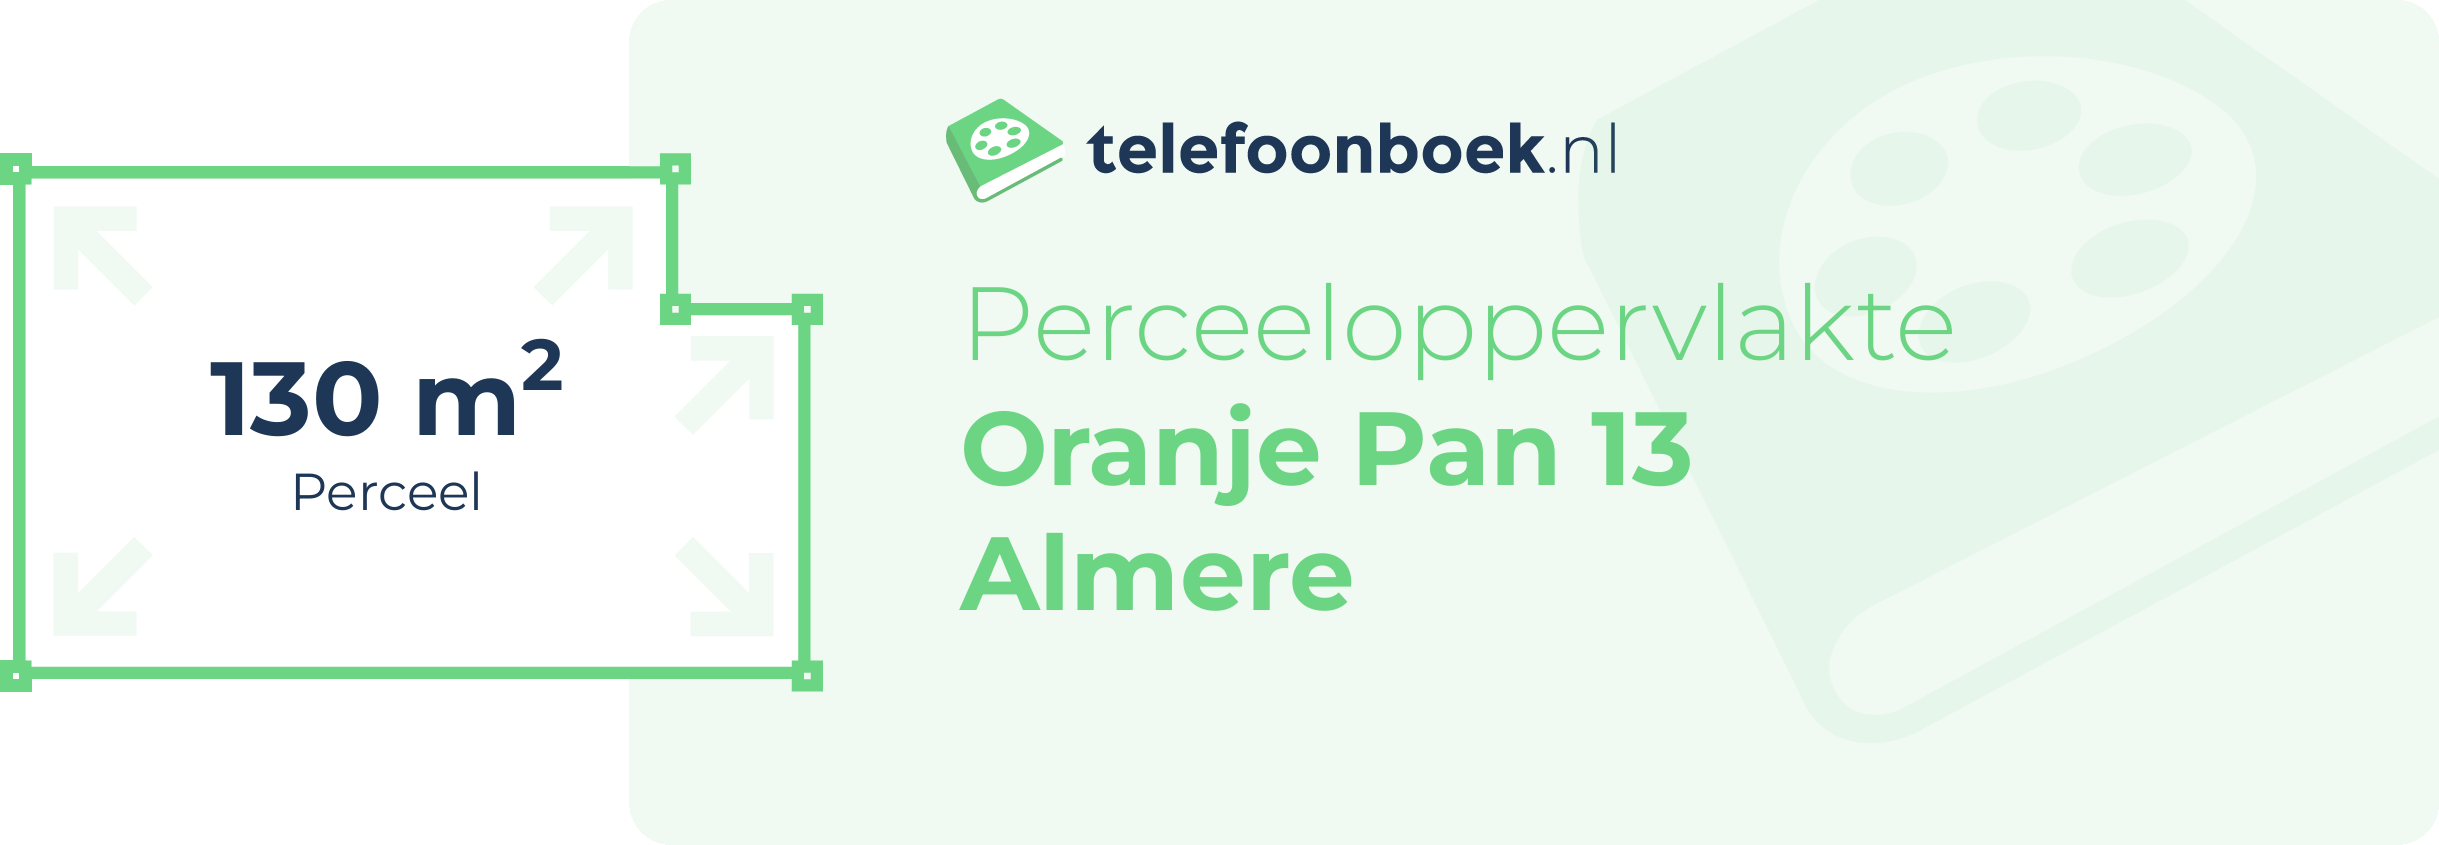 Perceeloppervlakte Oranje Pan 13 Almere